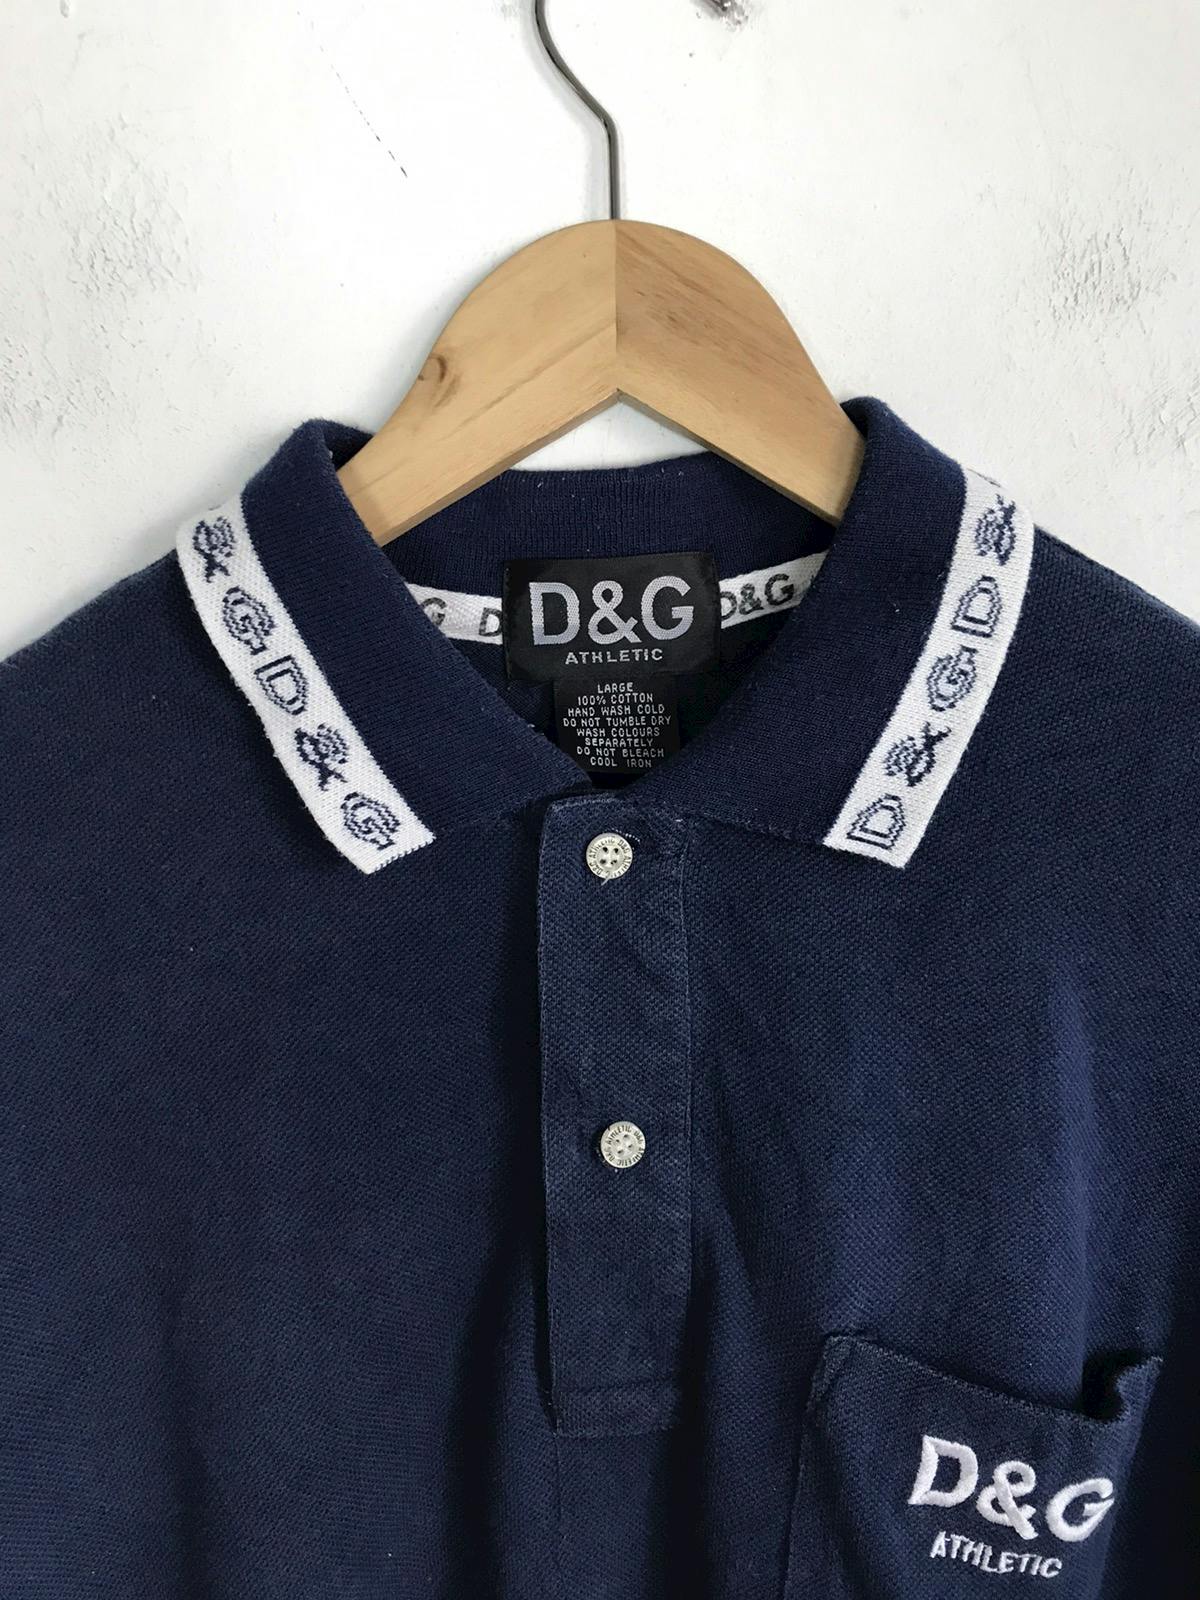 Vintage Dolce & Gabbana Athletic Polo Shirt - 3